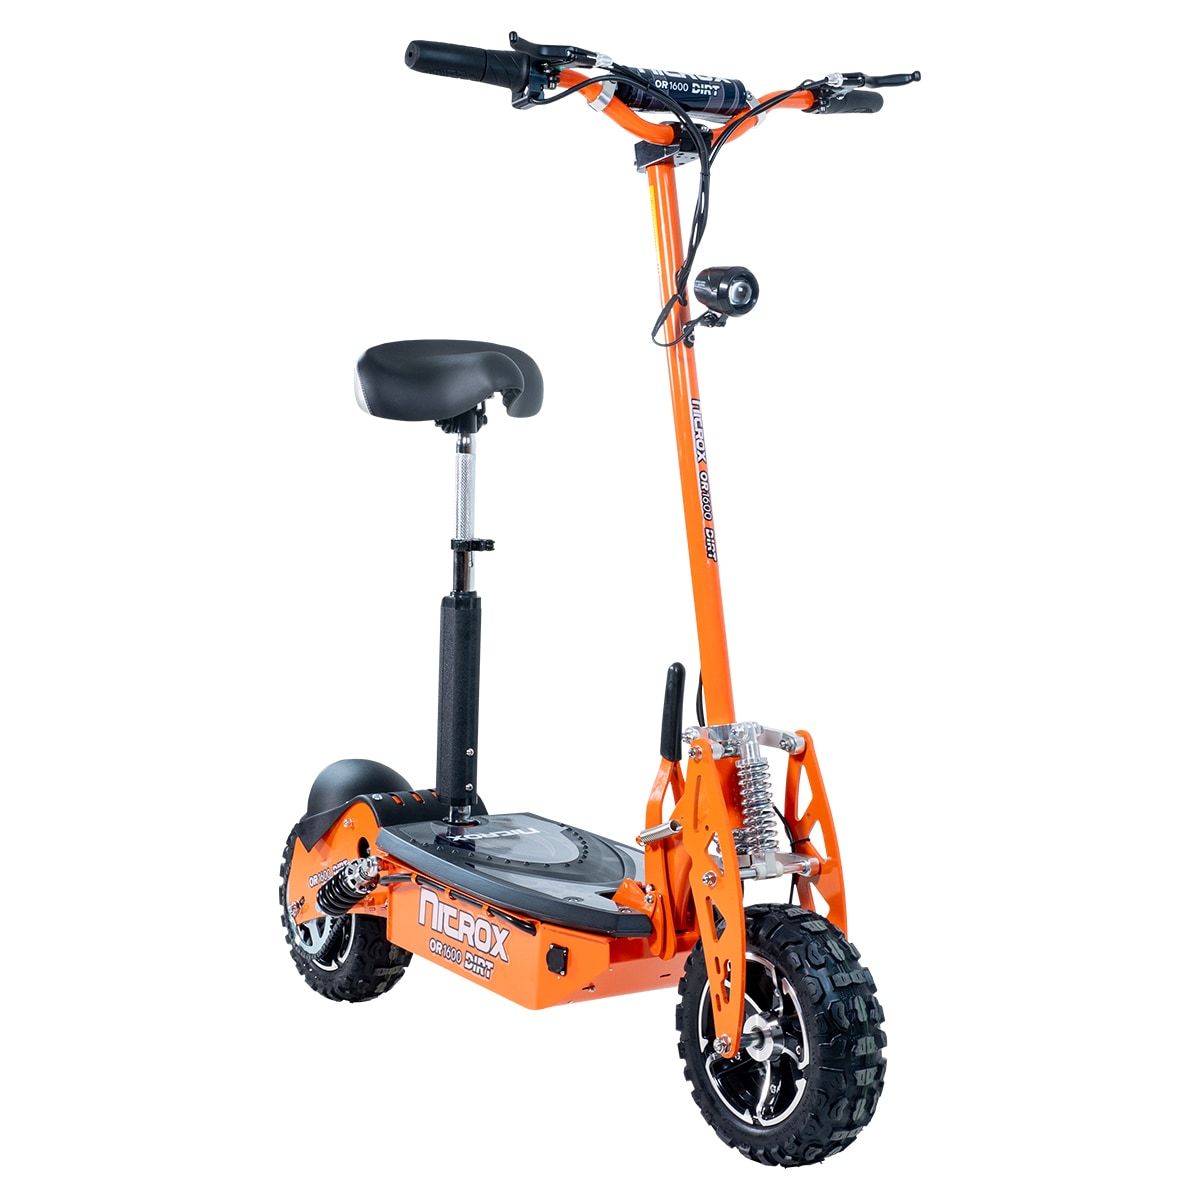 Fyndex - Elscooter Nitrox OR1600 Dirt - Orange